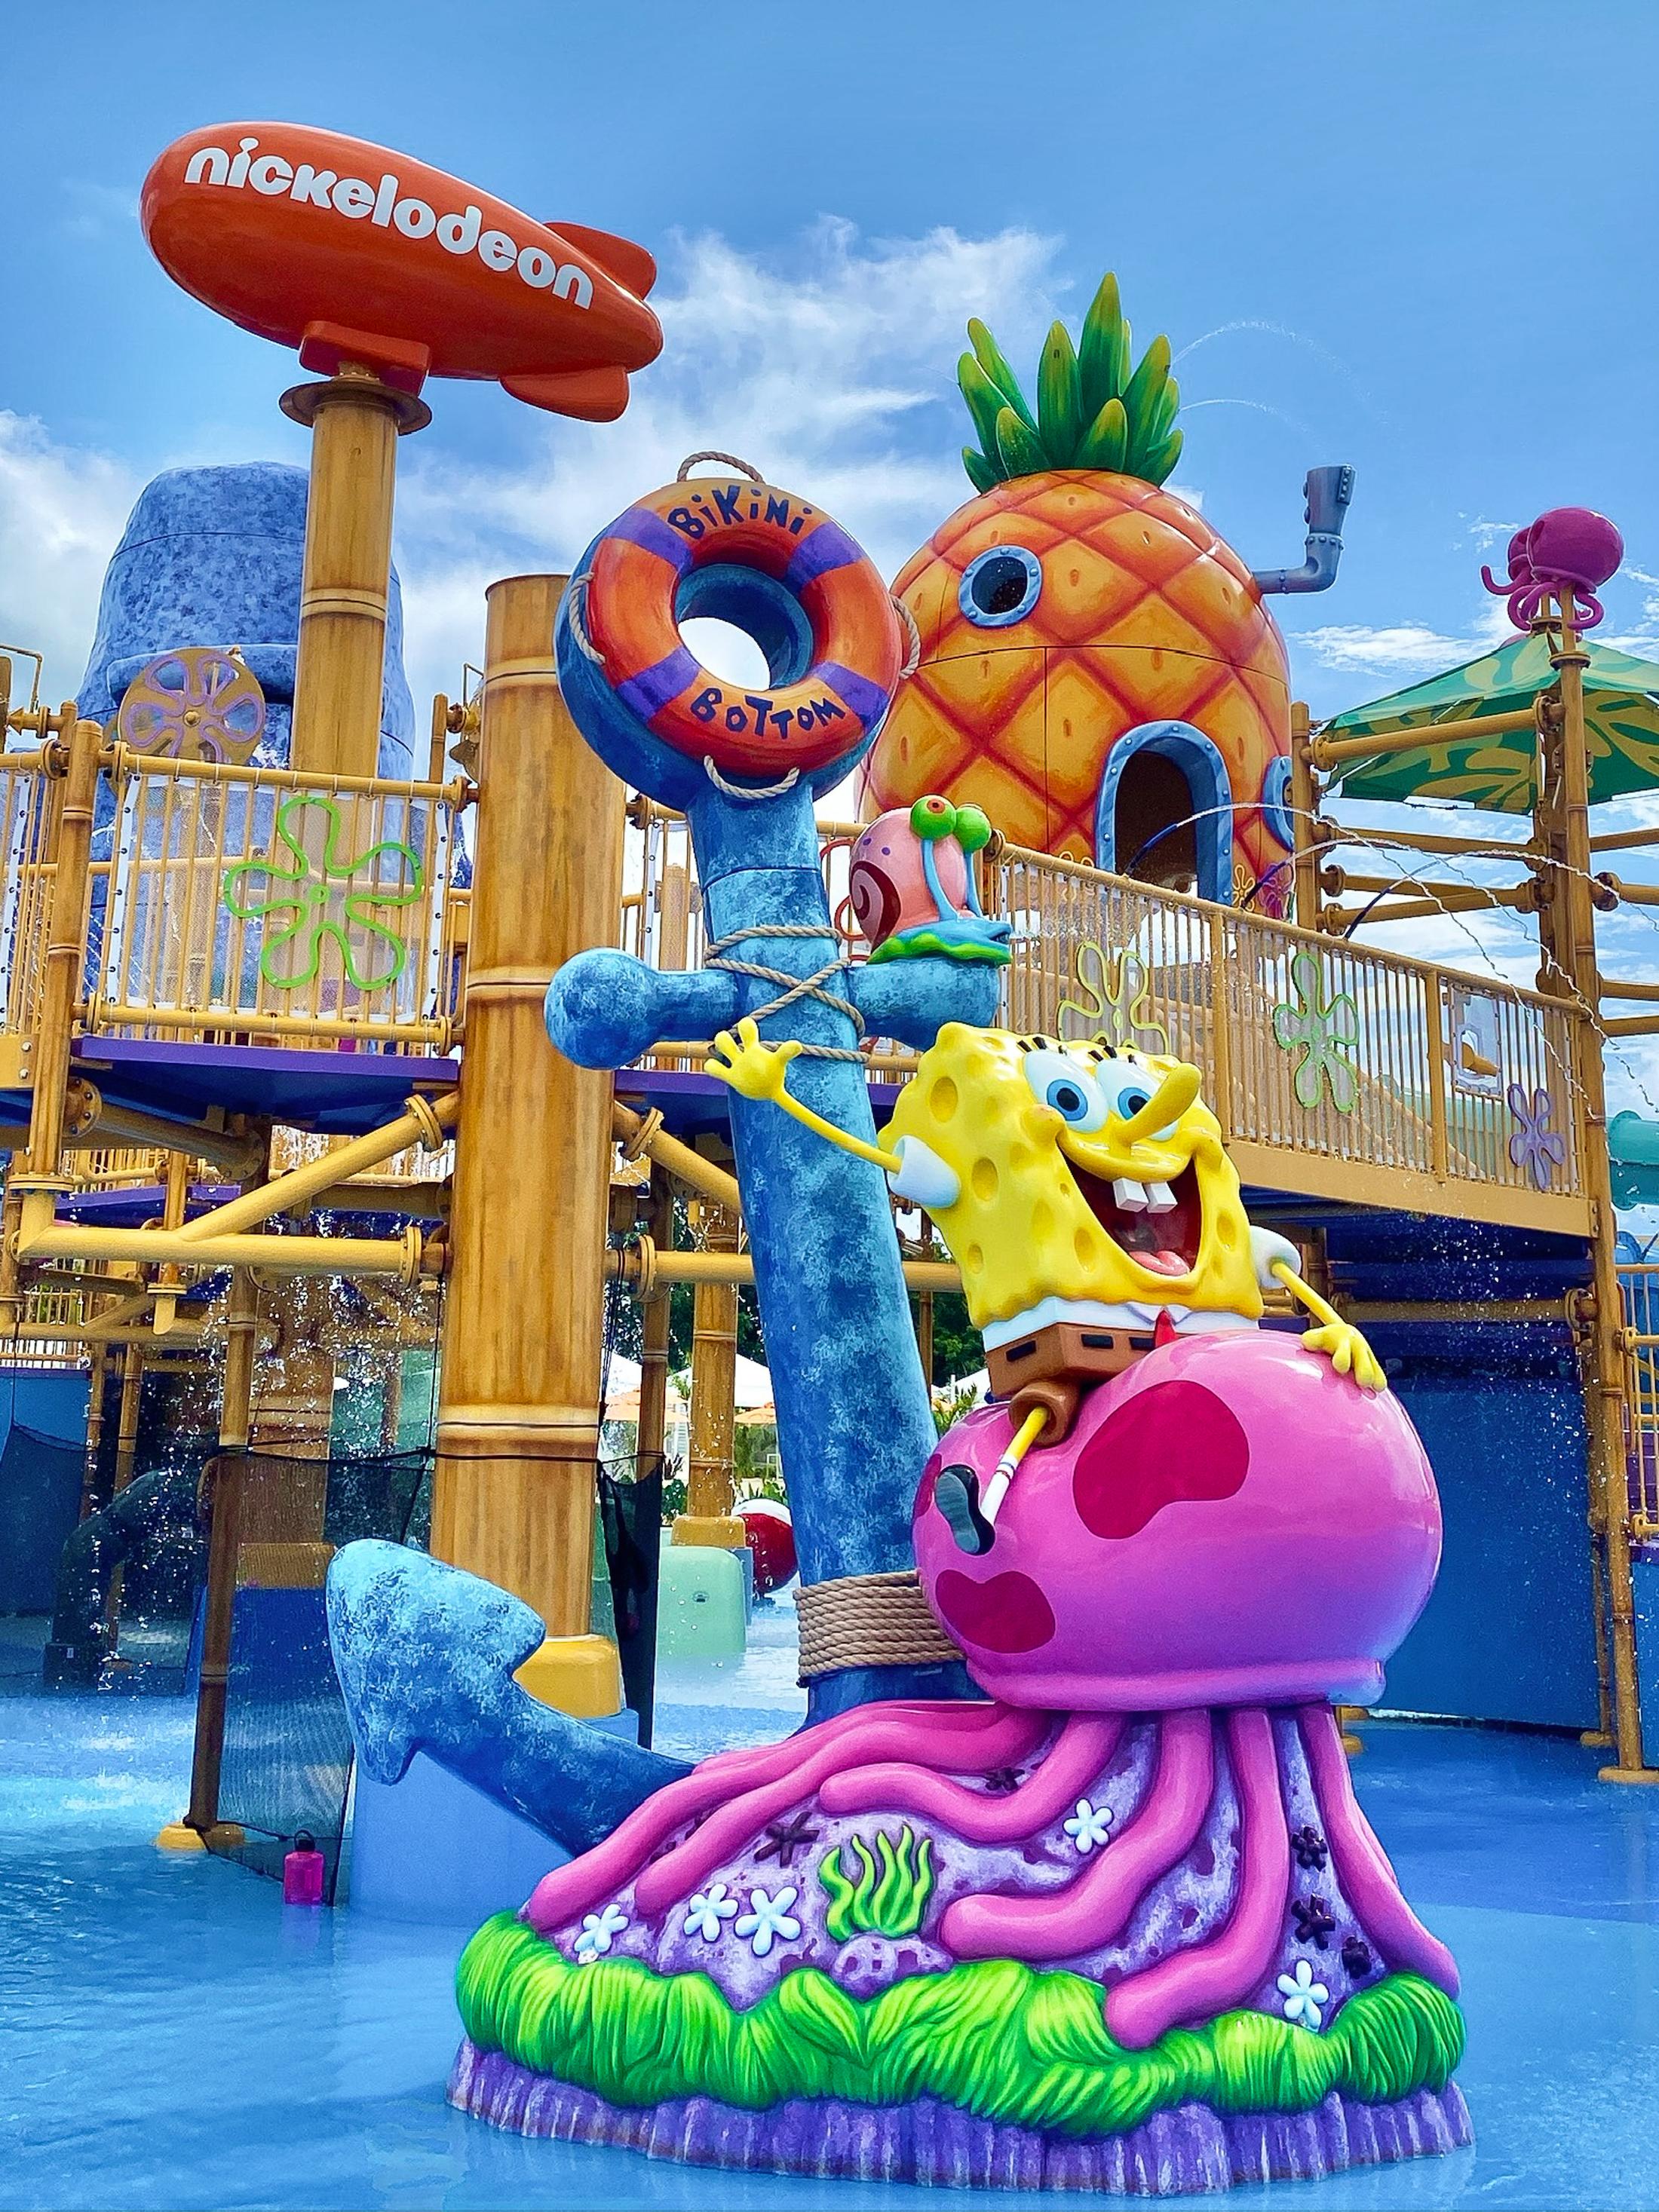 A spongebob statue at the Riviera Maya waterpark